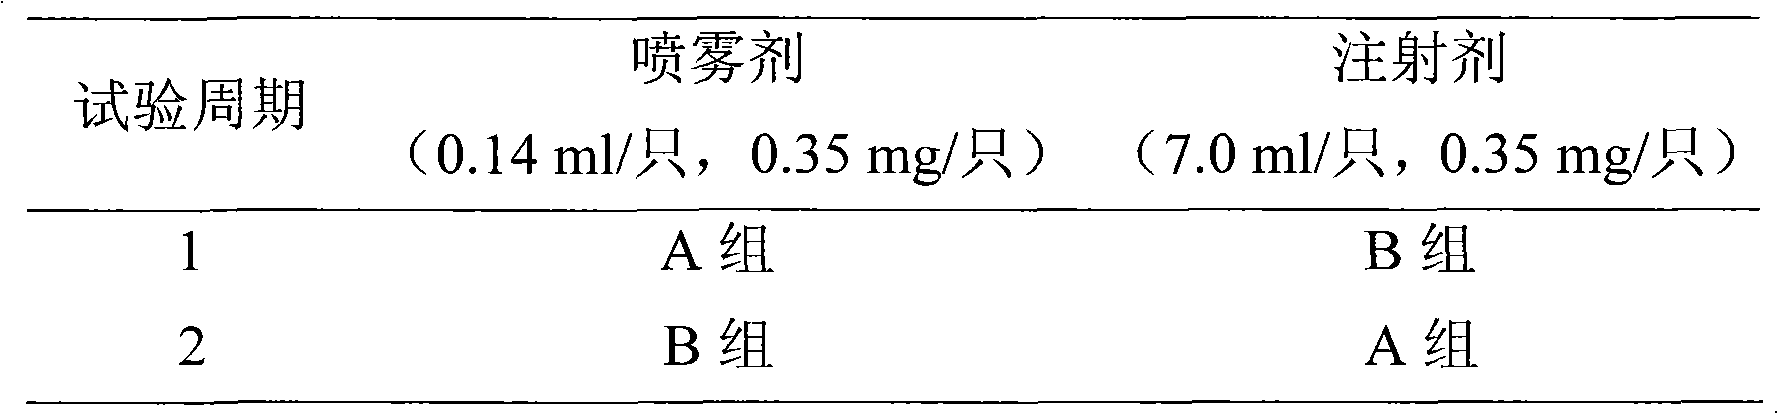 Oral spray or aerosol containing Palonosetron